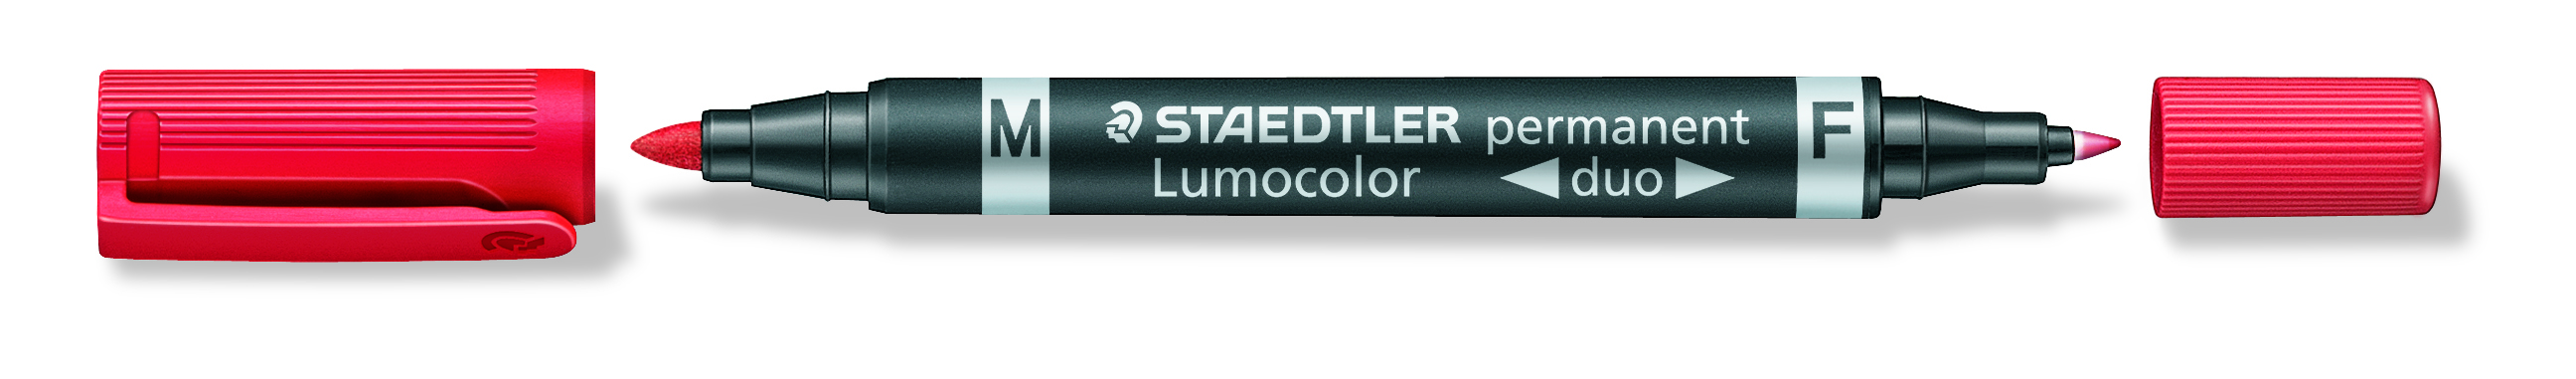 Marker Lumocolor Duo Perm 0,6-1,5mm rd, Staedtler 348-2,10stk